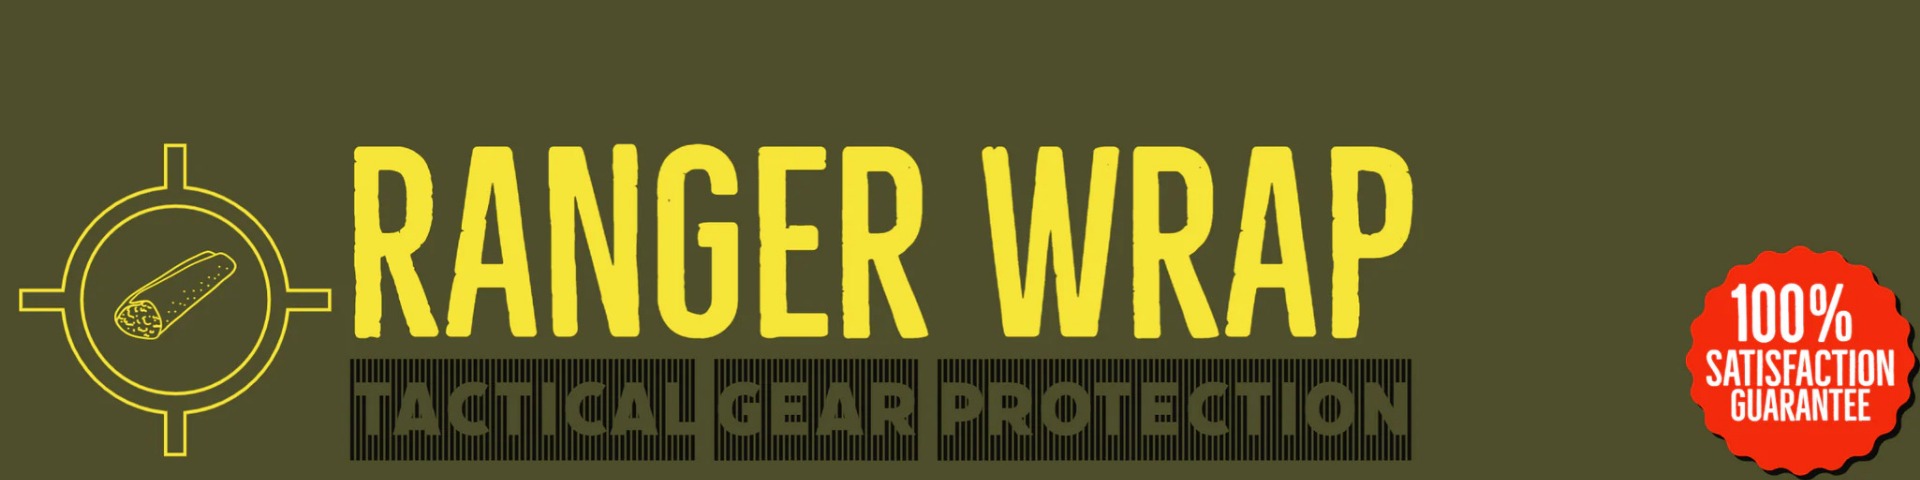 Ranger Wrap